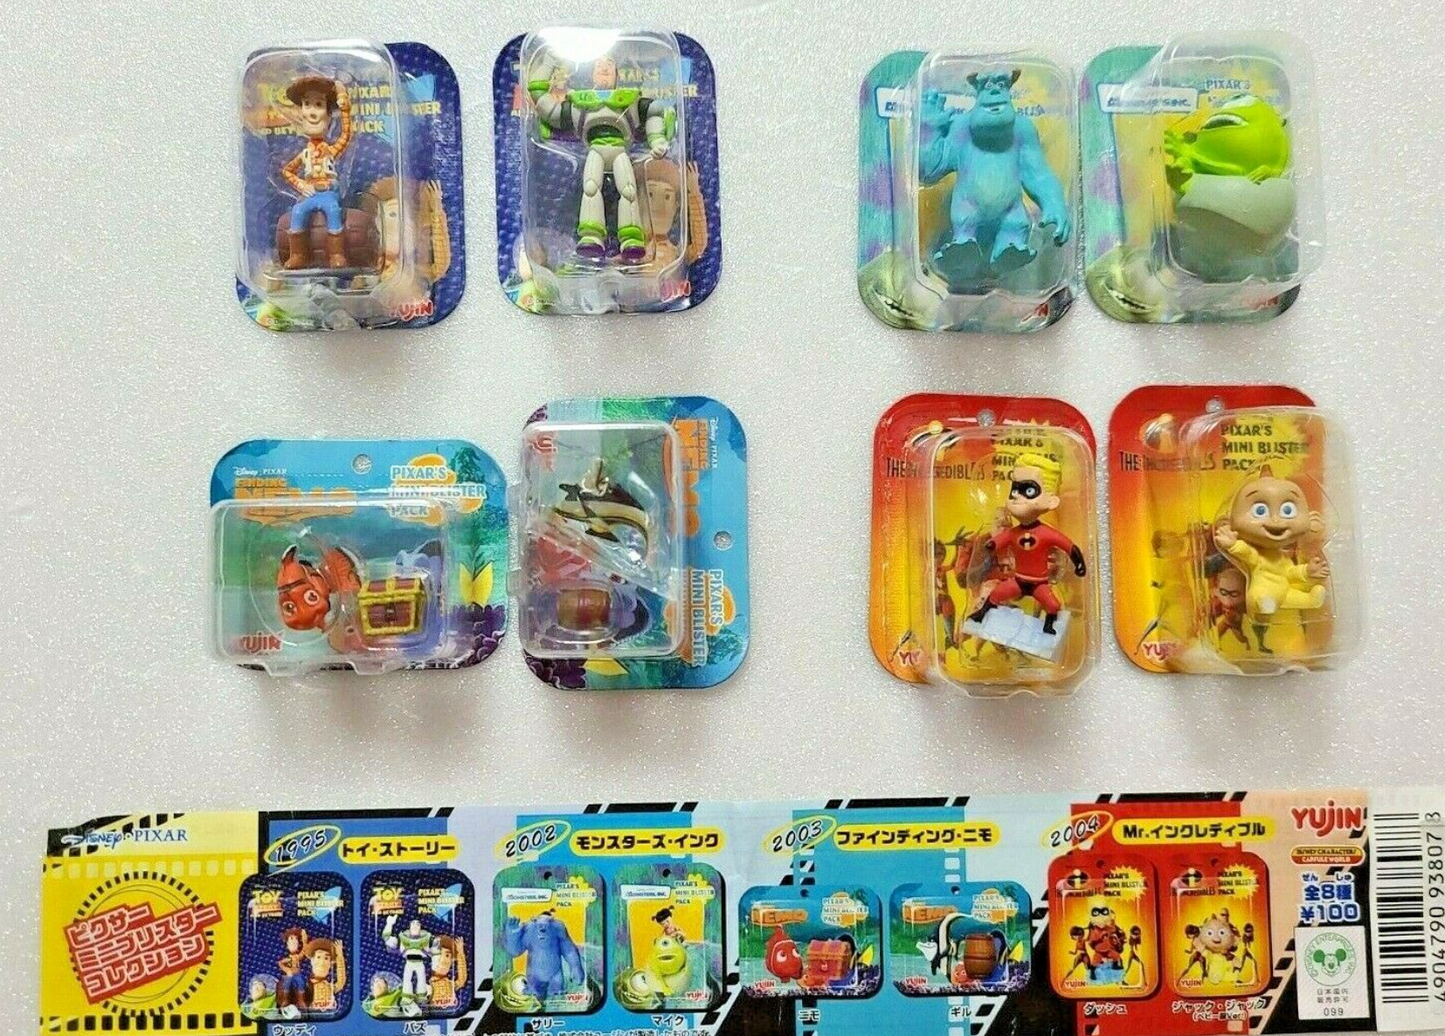 Yujin Disney Pixar Gashapon Mini Blister 8 Collection Figure Set